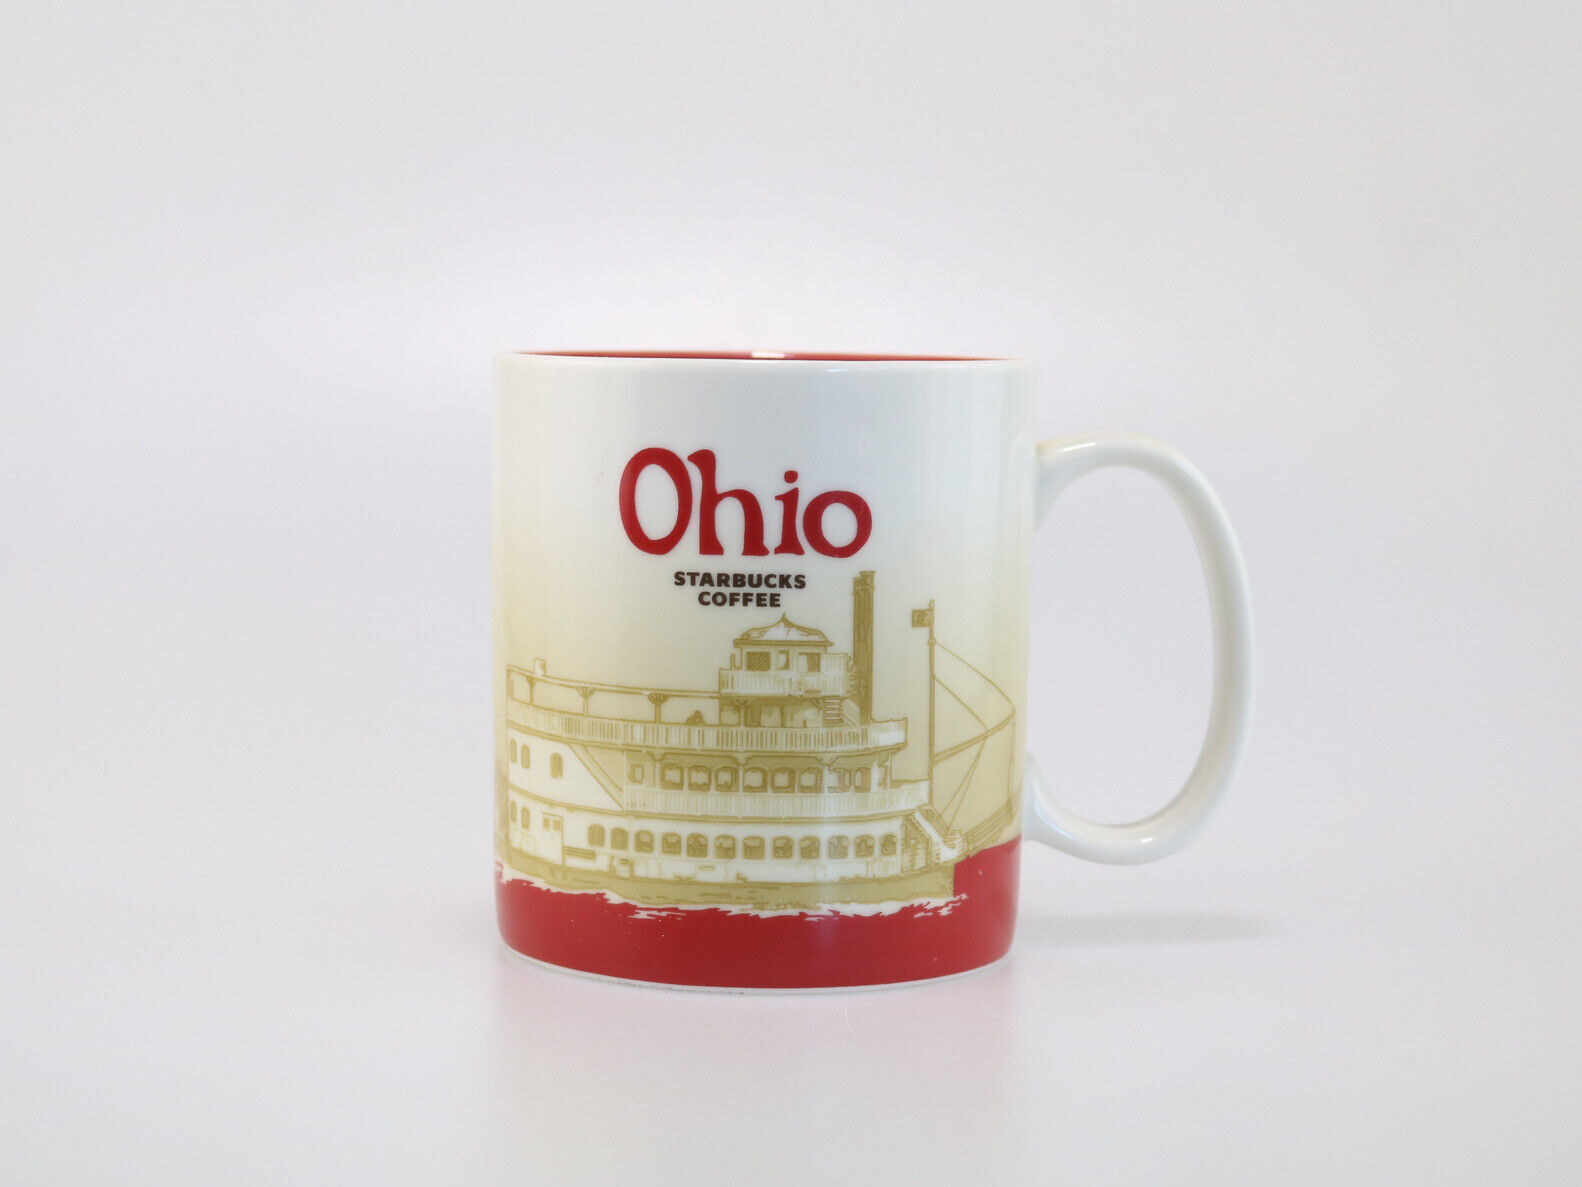 Starbucks Ohio Coffee Tea Cup Mug 16 oz Collector Series 2009 Red Gold Barista